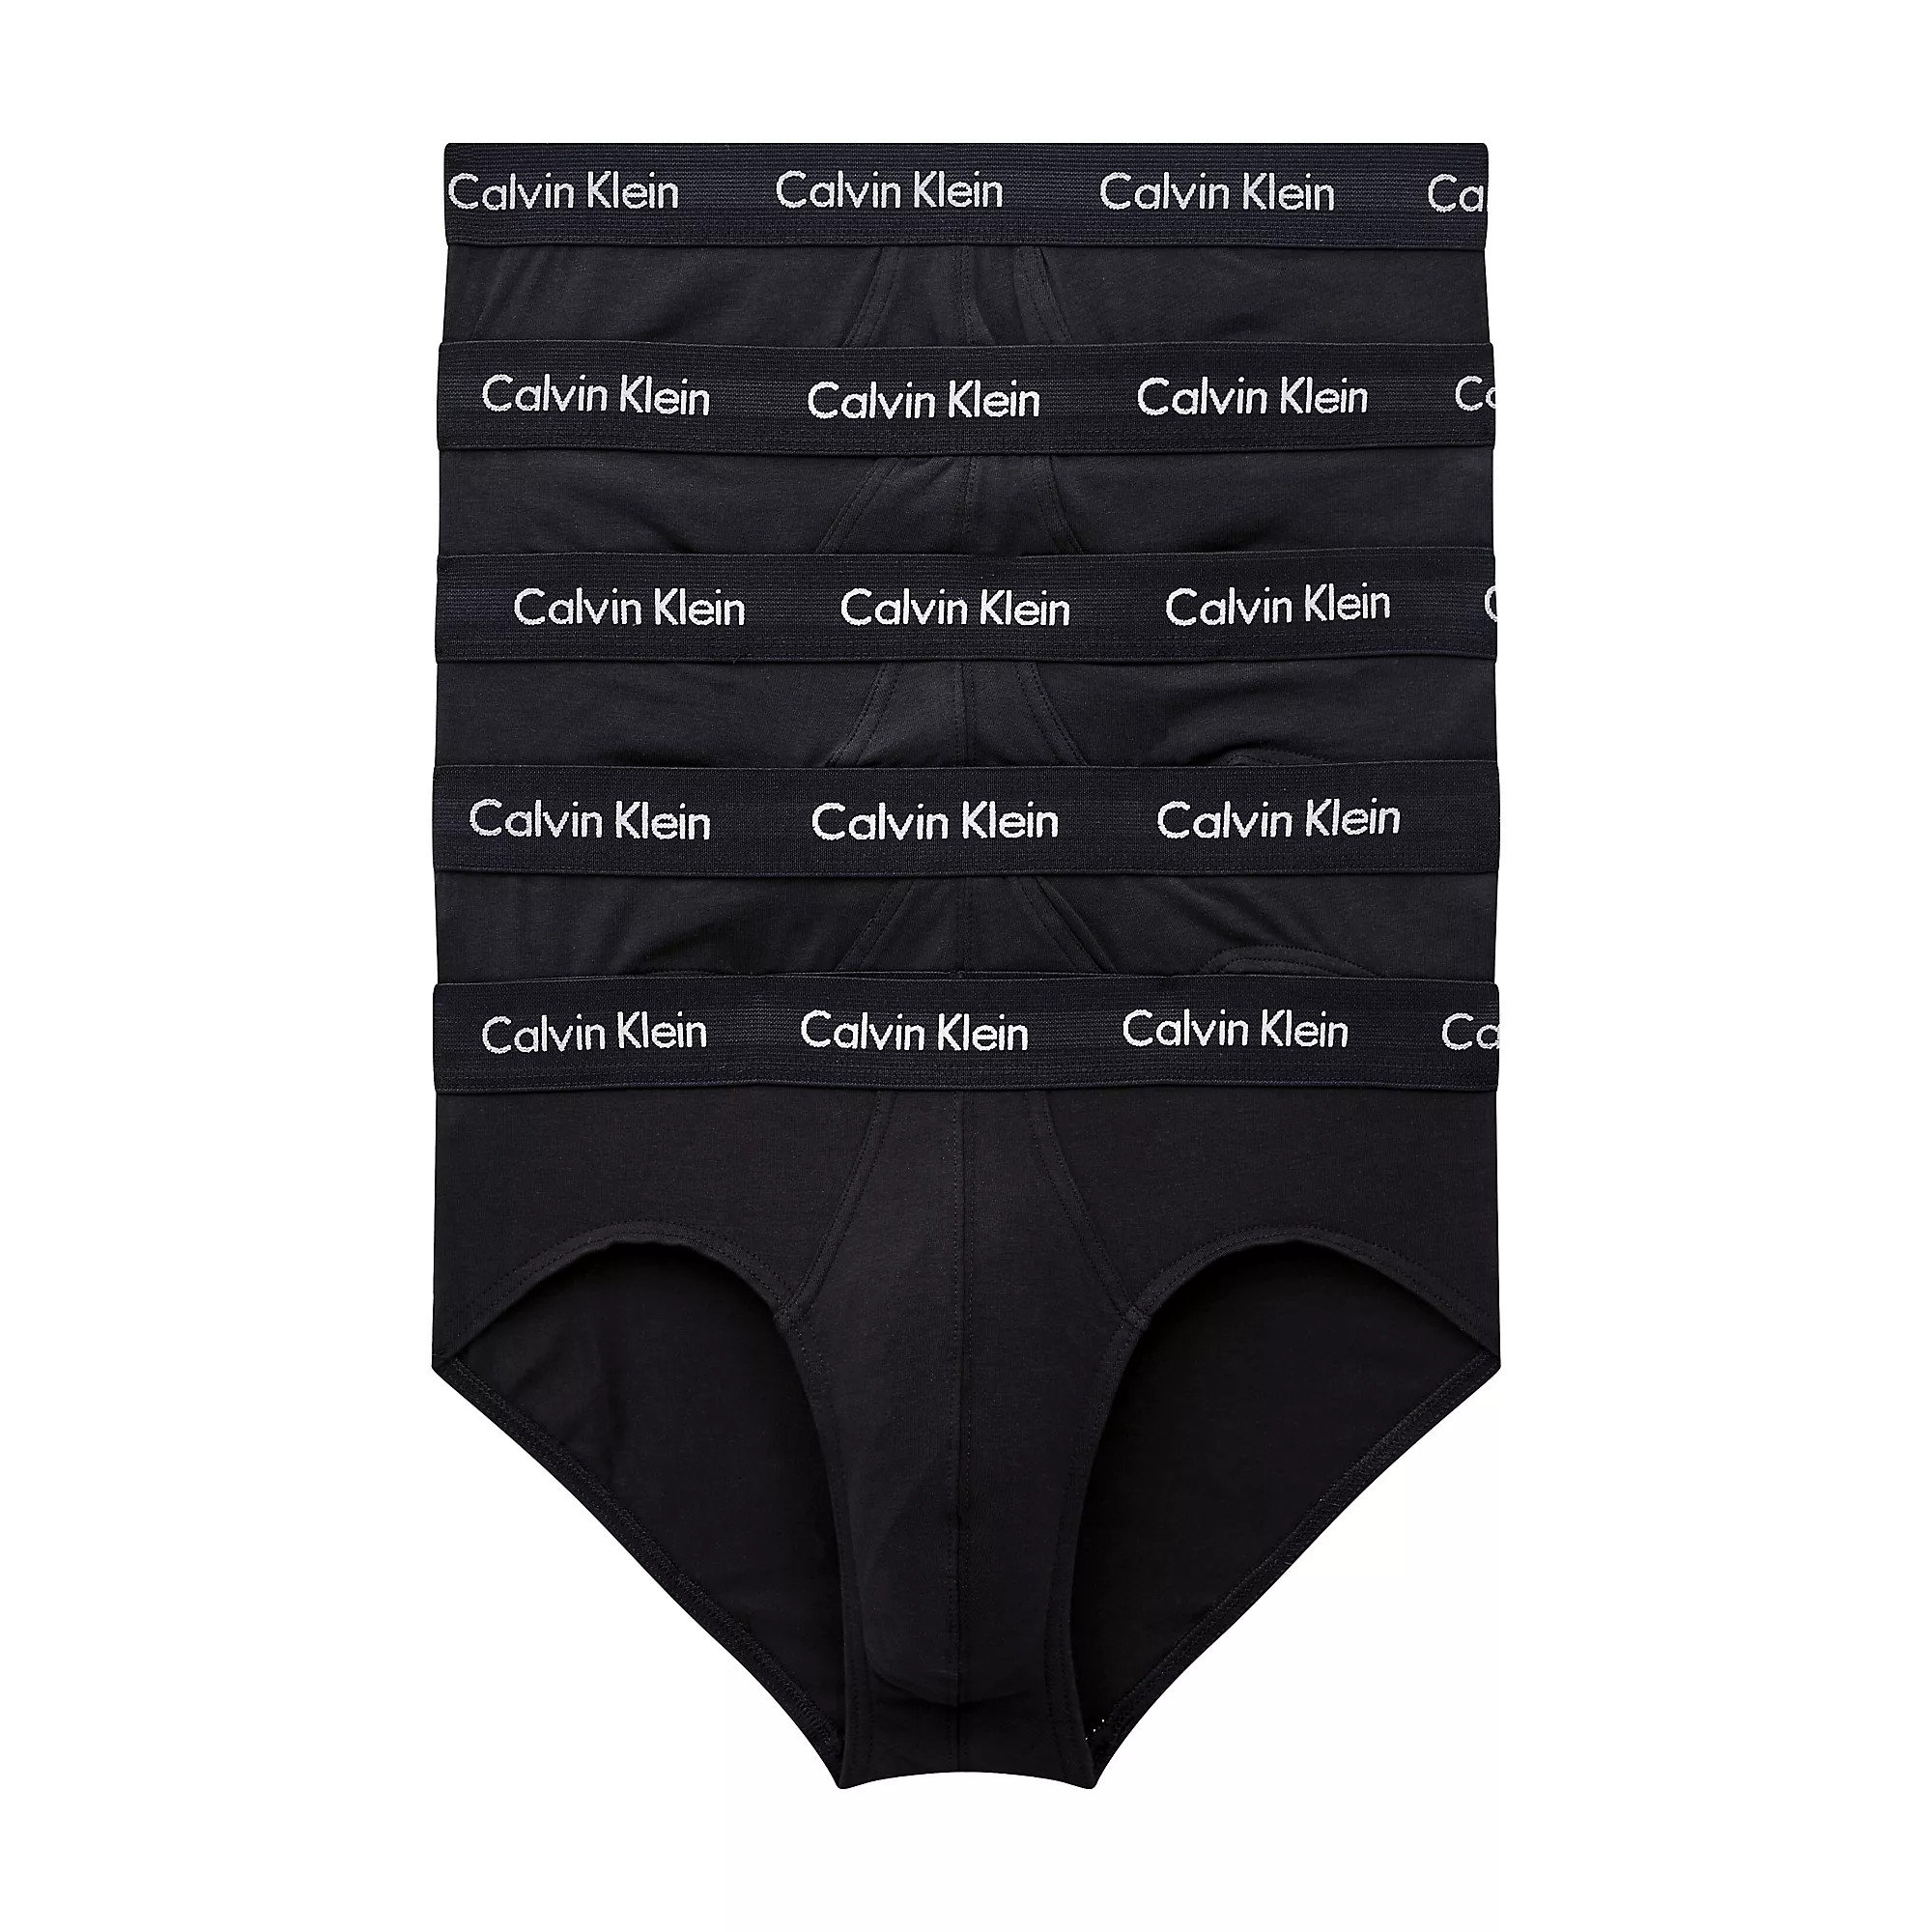 Pánské spodní prádlo HIP BRIEF 5PK 000NB2876AXWB - Calvin Klein M